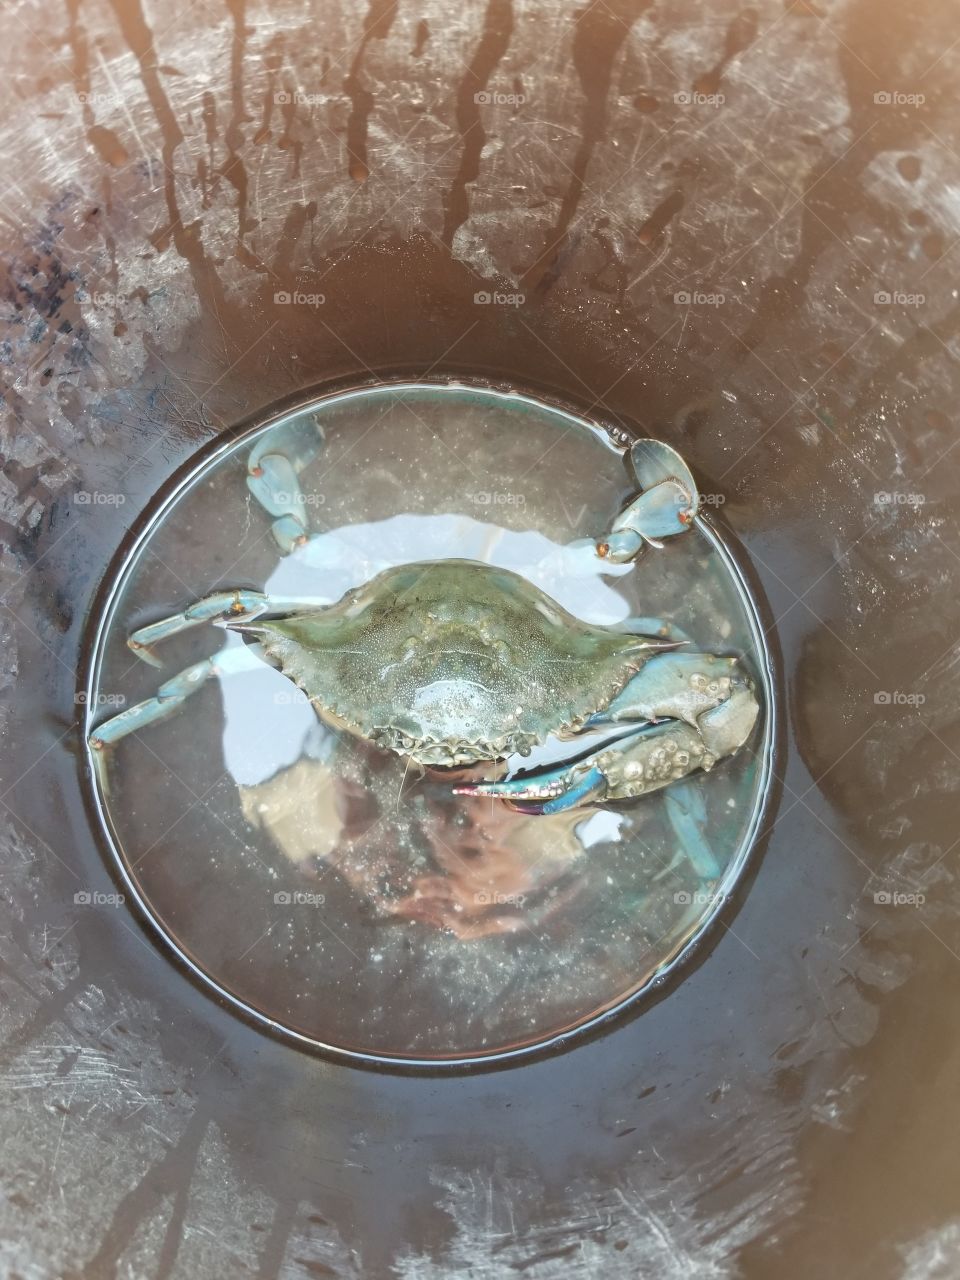 Crab in a bucket